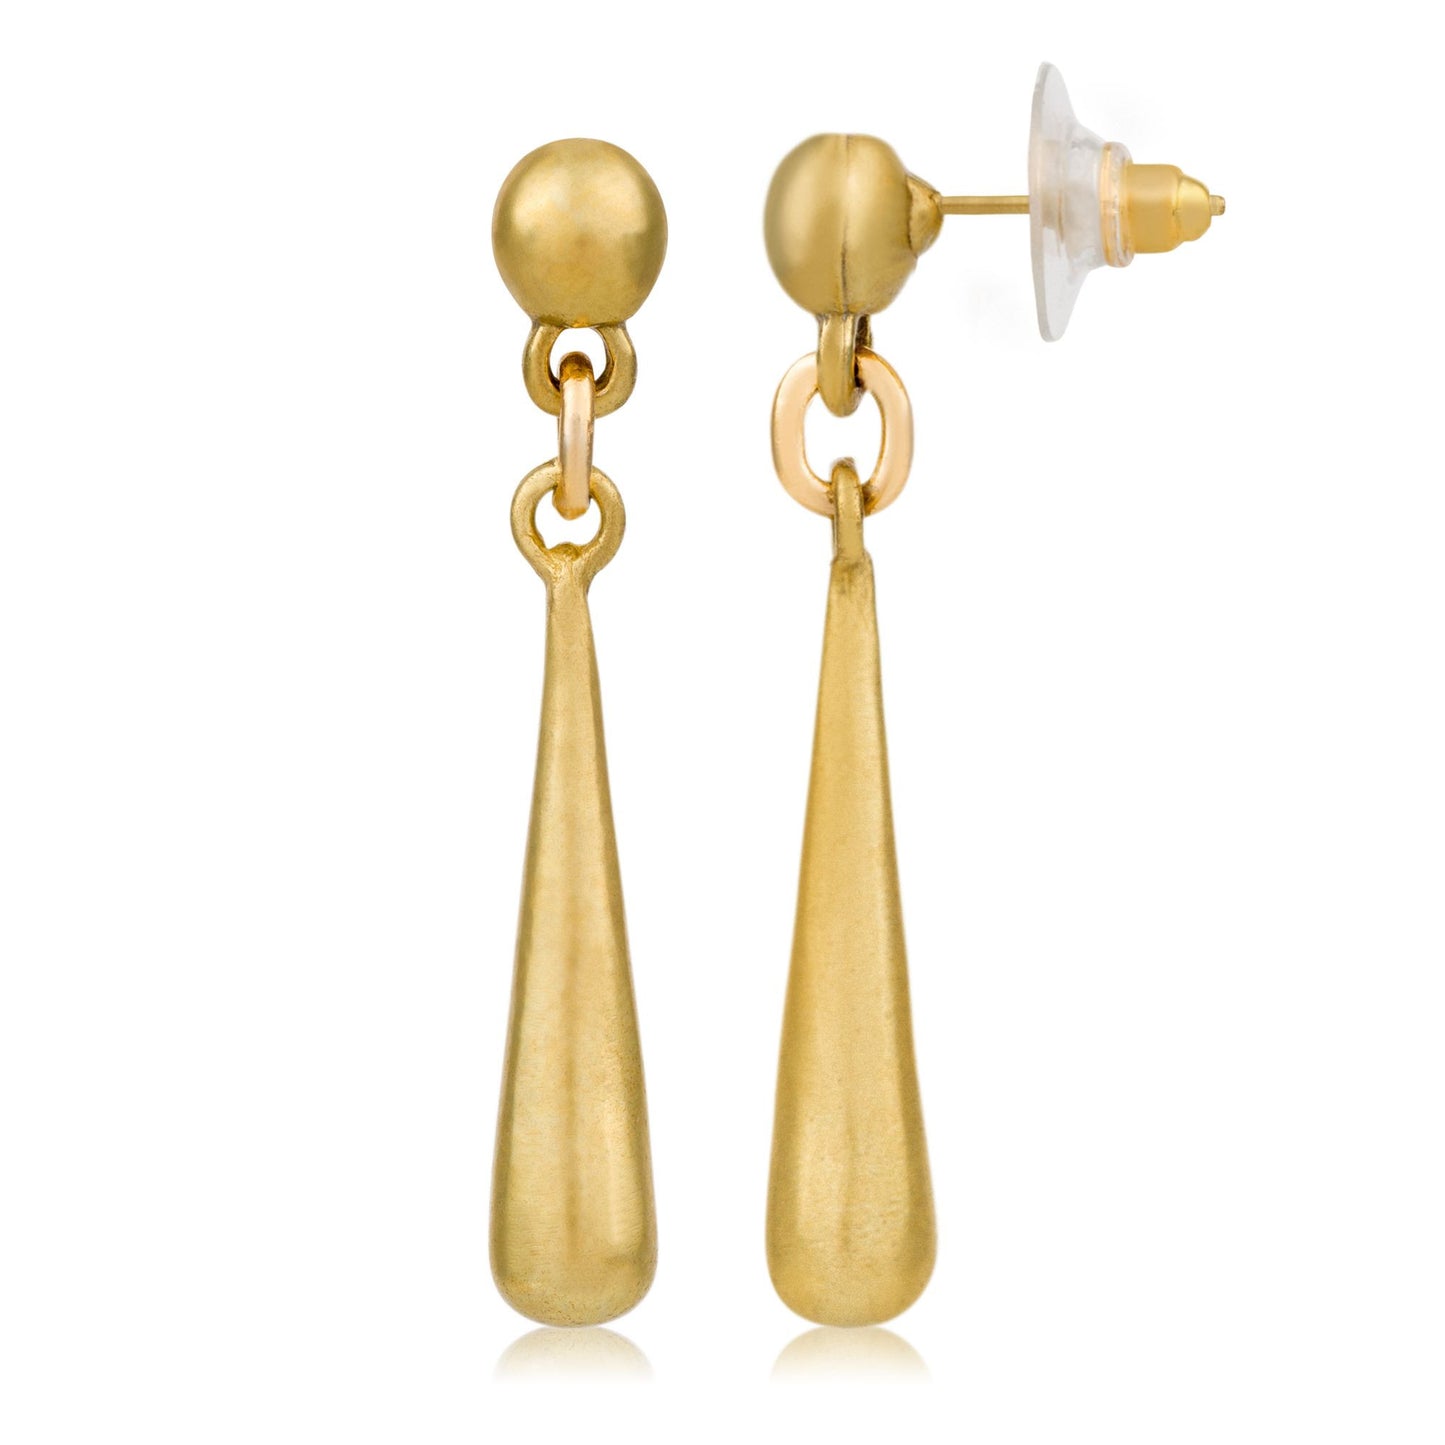 Long golden earring with golden teardrop